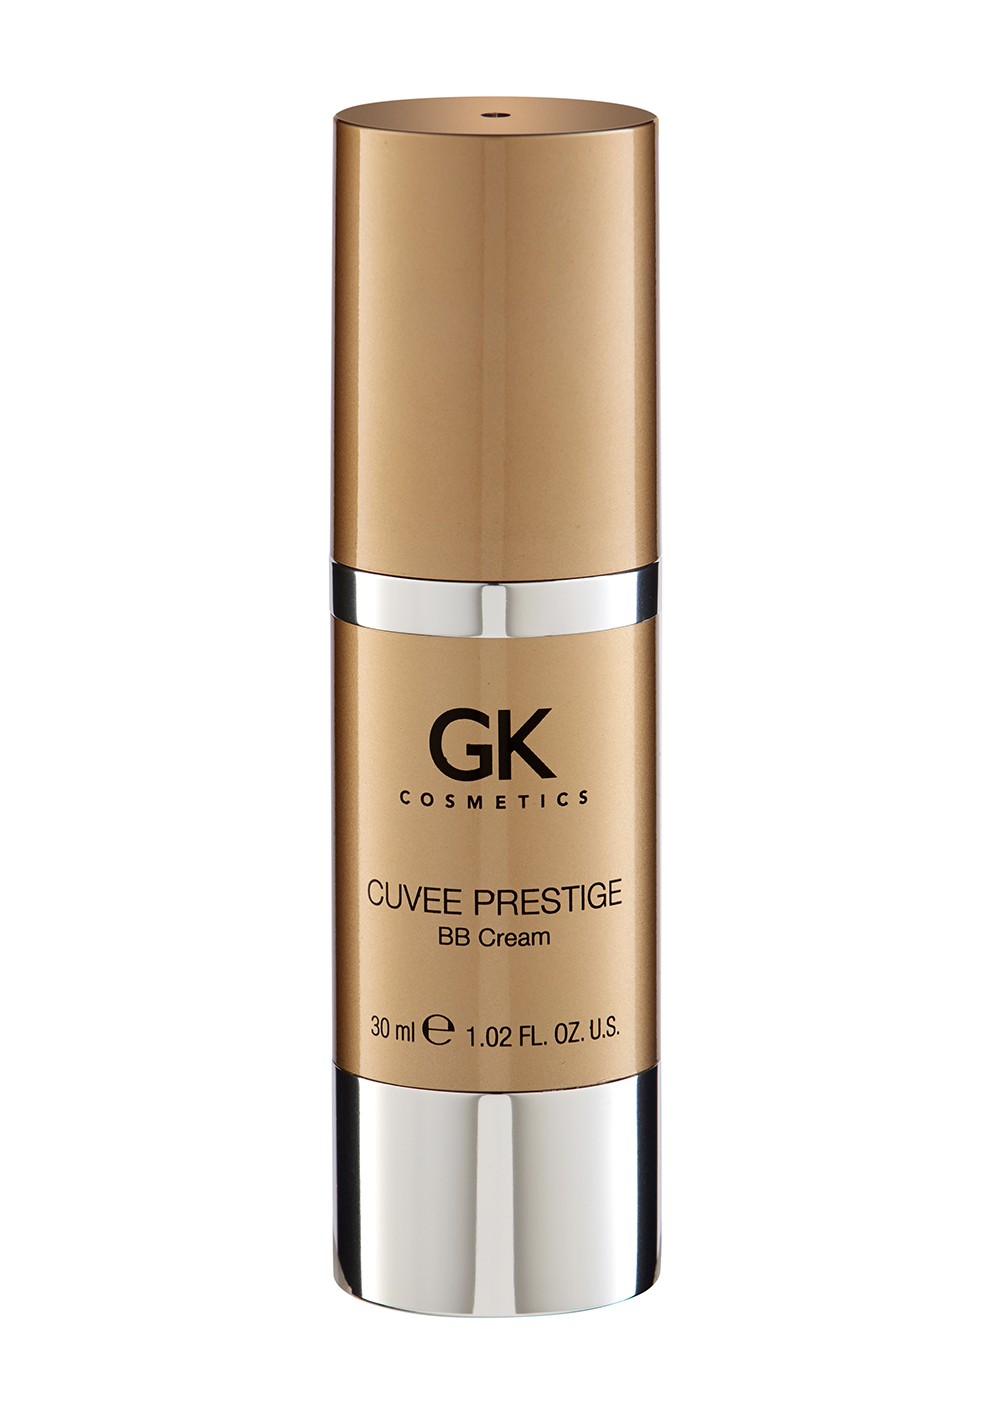 gk-cosmetics-cuvee-prestige-bb-cream